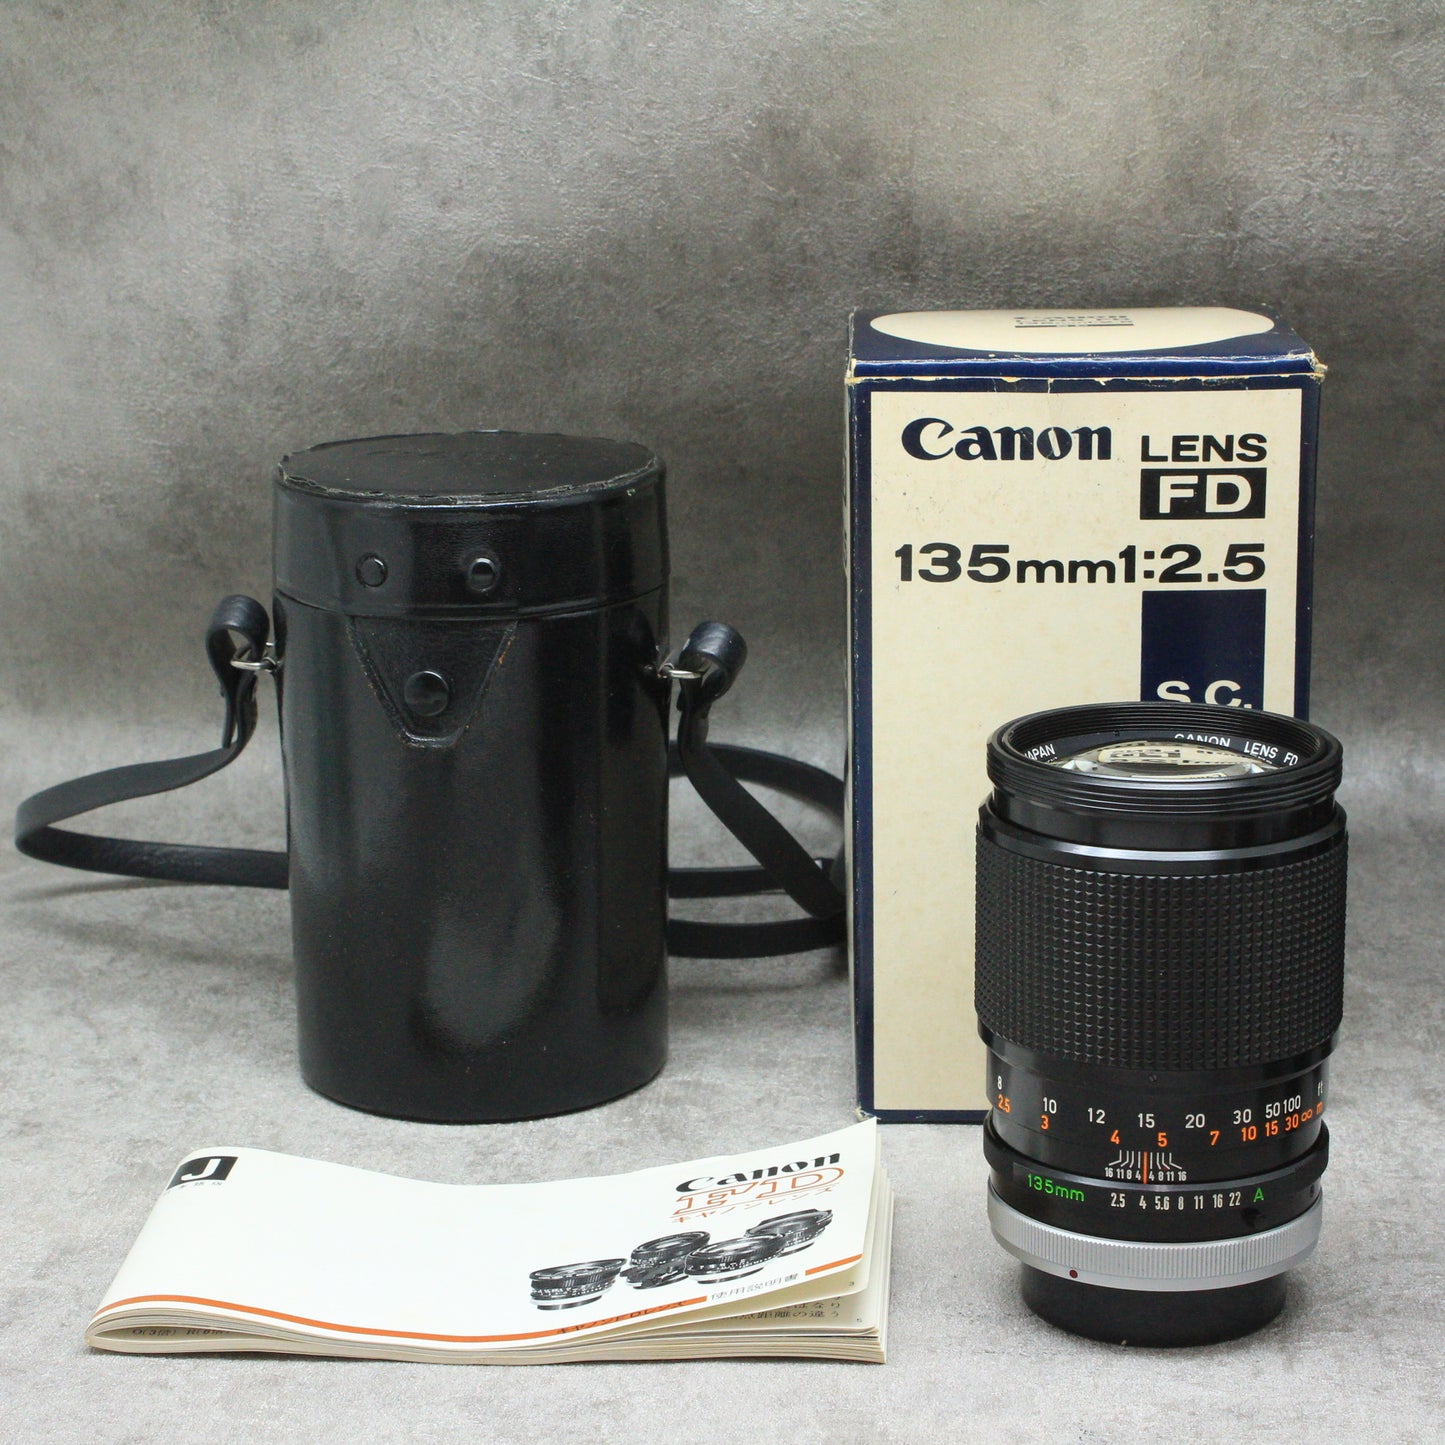 CANON FD 135mm F2.5 s.c. - レンズ(ズーム)